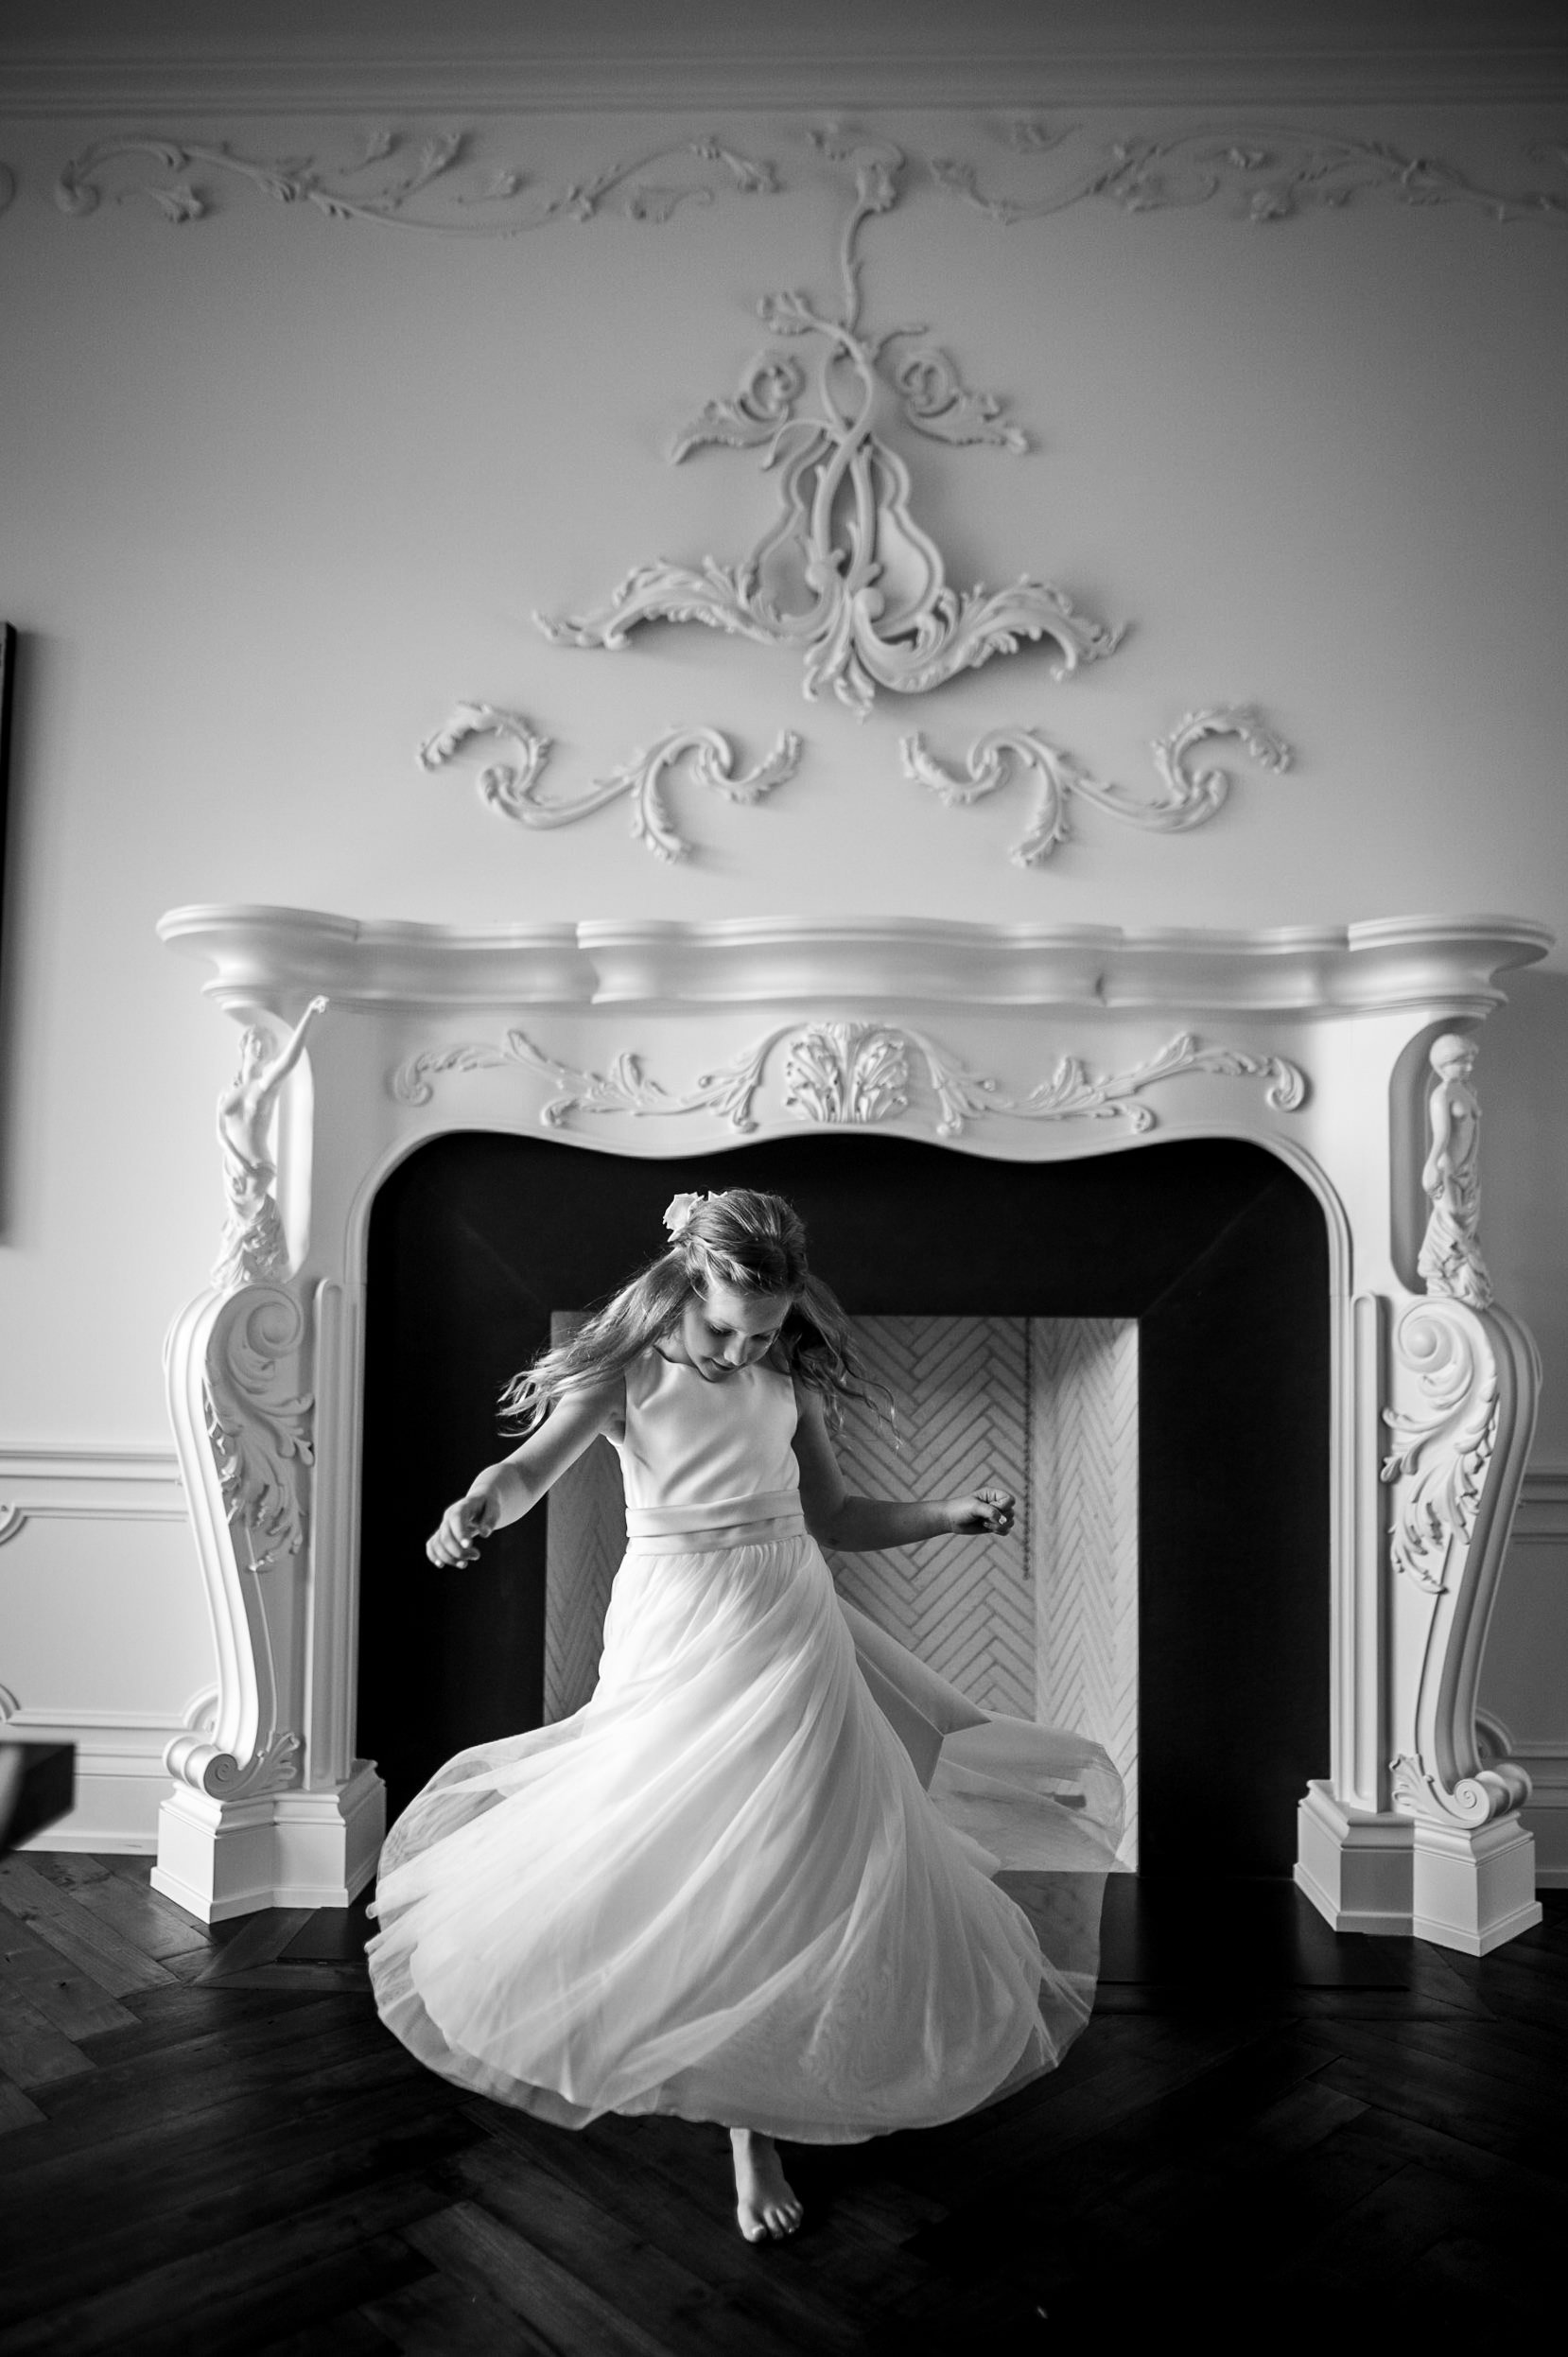 Candid Fine Art Wedding Portraits - Chris Bailey Photography.jpg